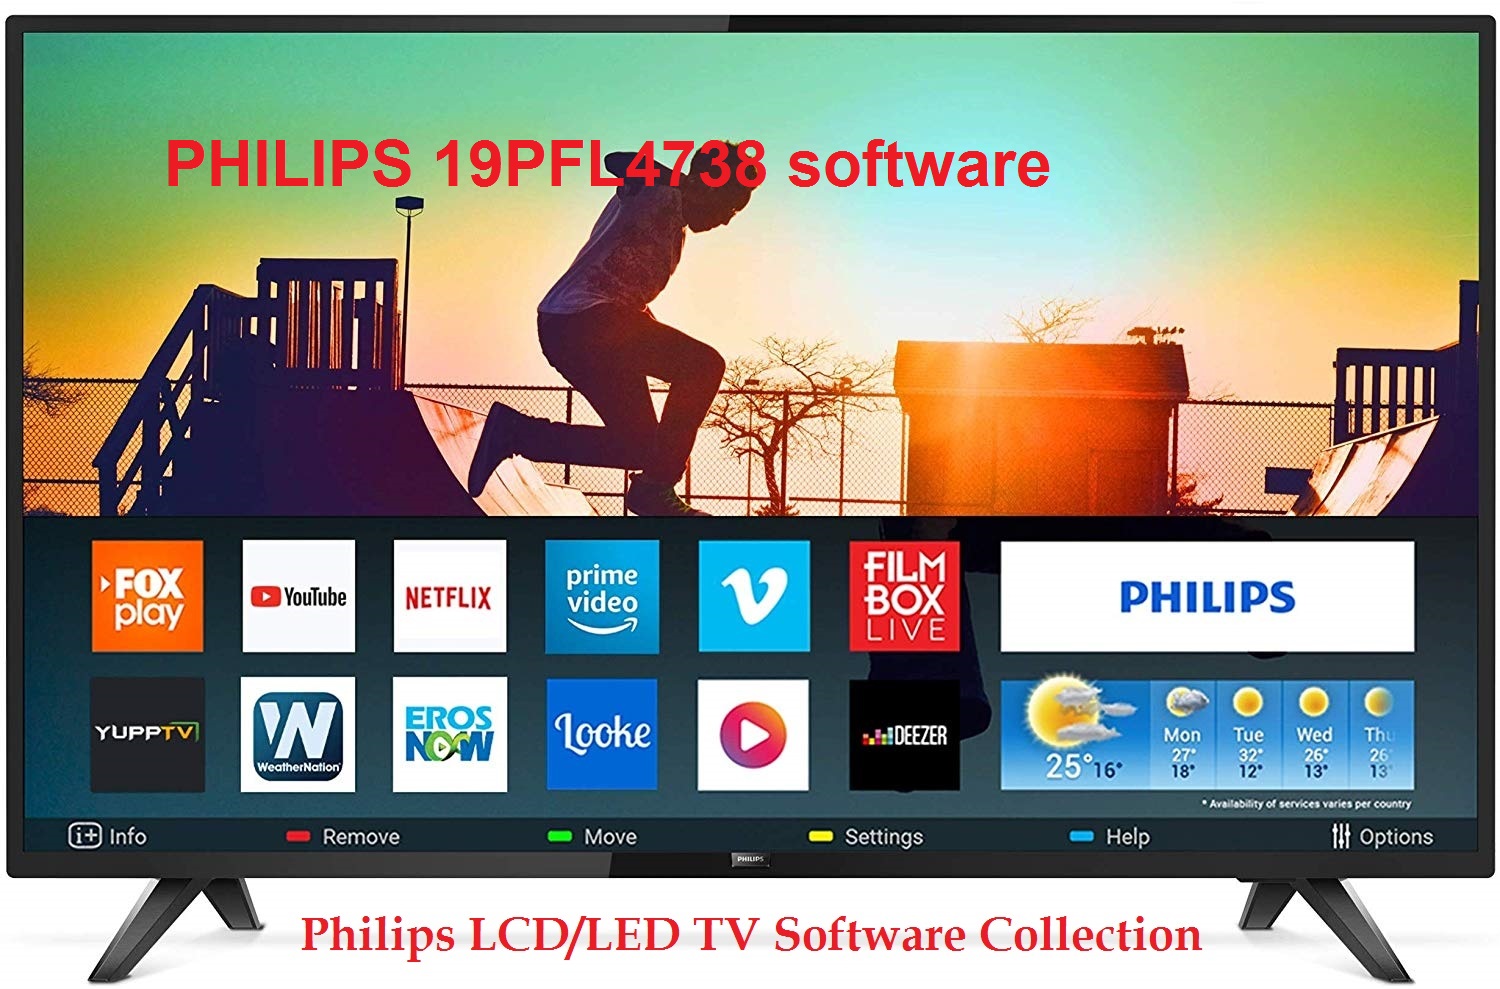 Philips 19Pfl4738